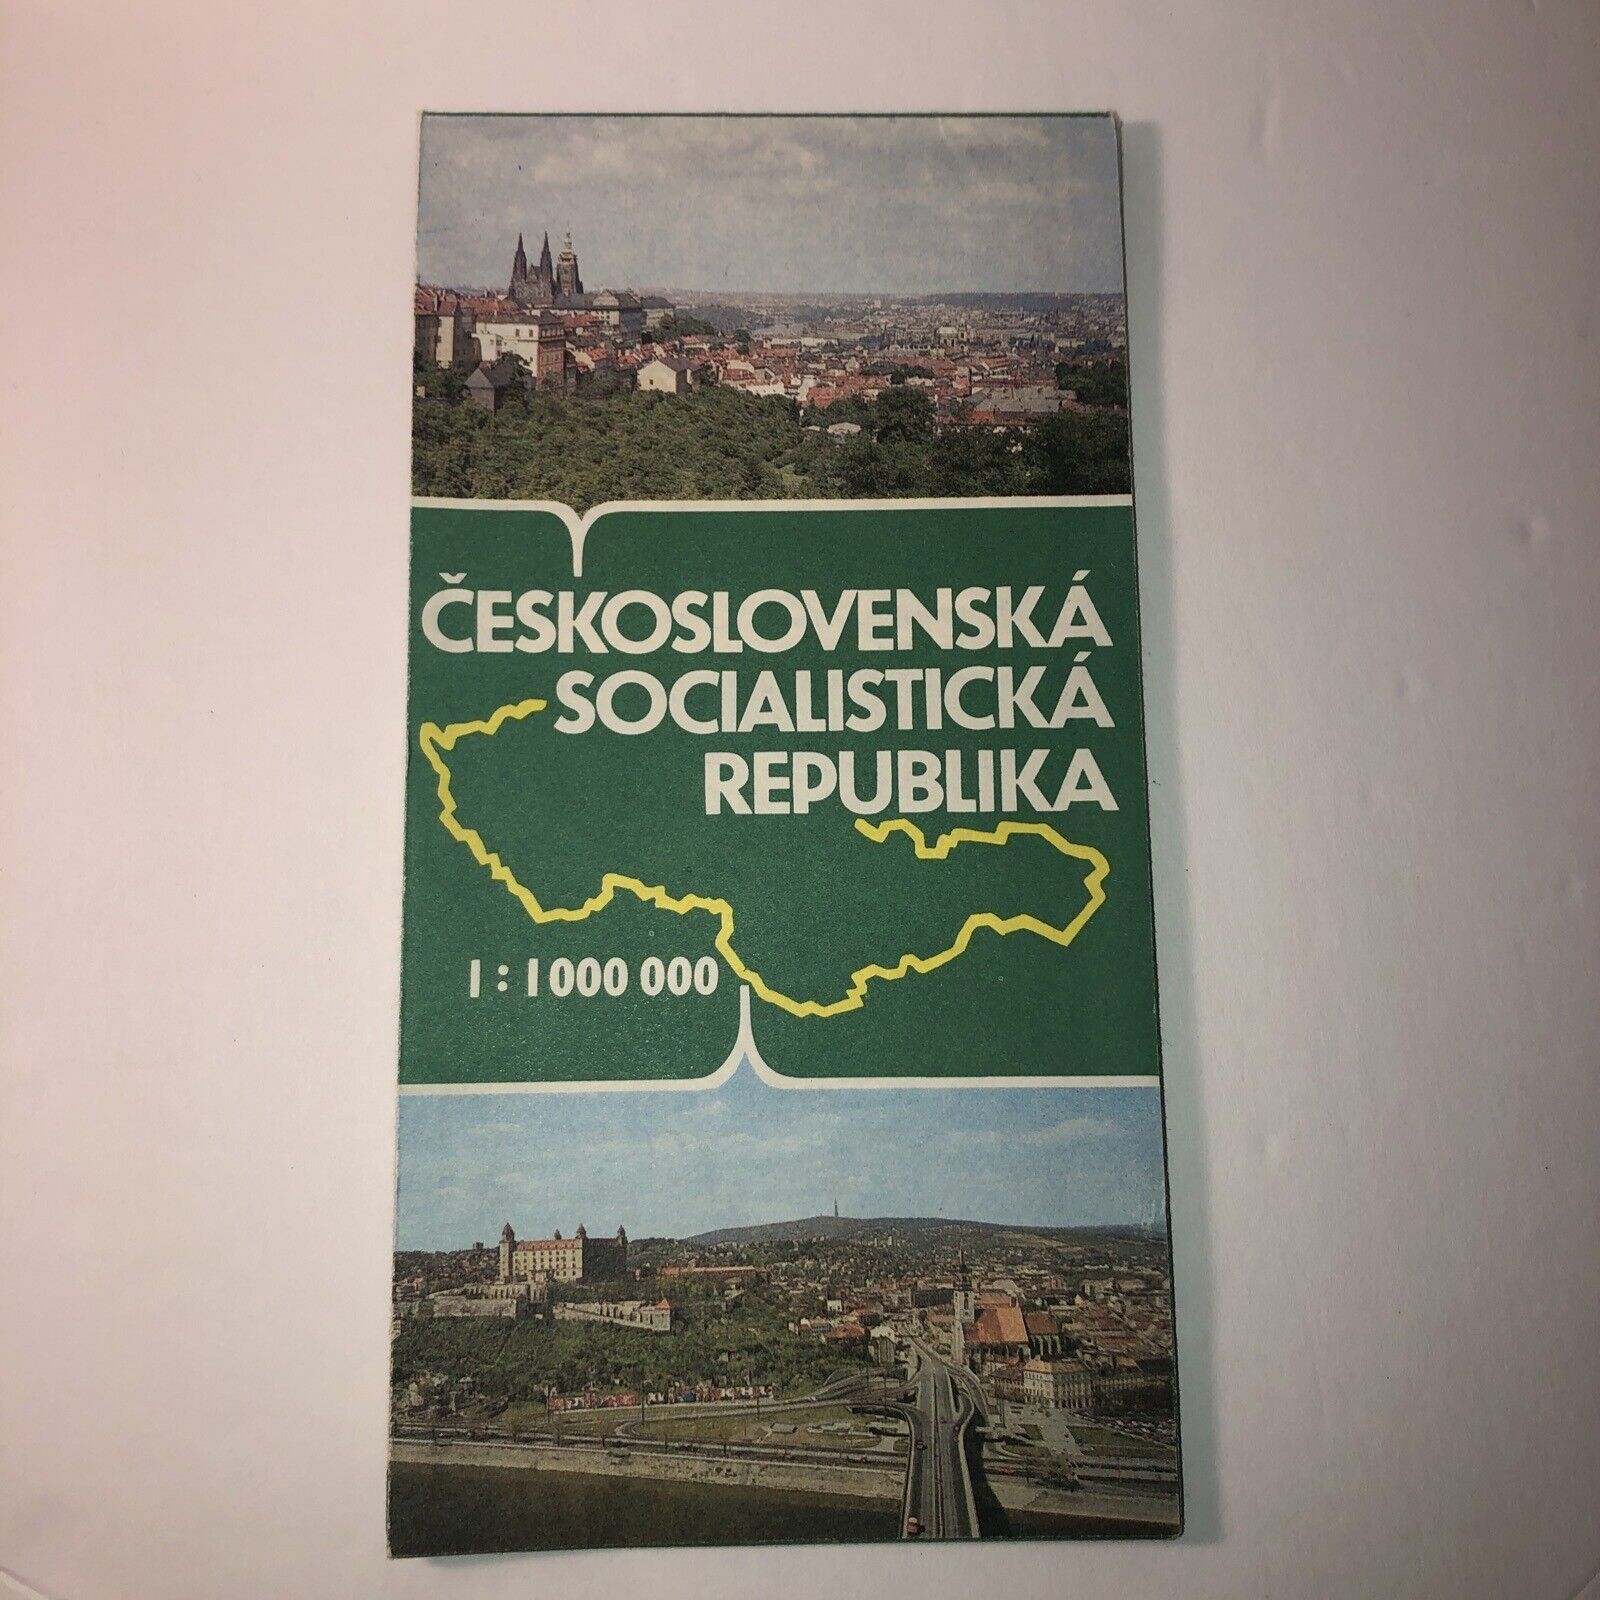 Limited/Rare Czechoslovak Socialist Republic (Czechoslovakia) Tourist Map 1989